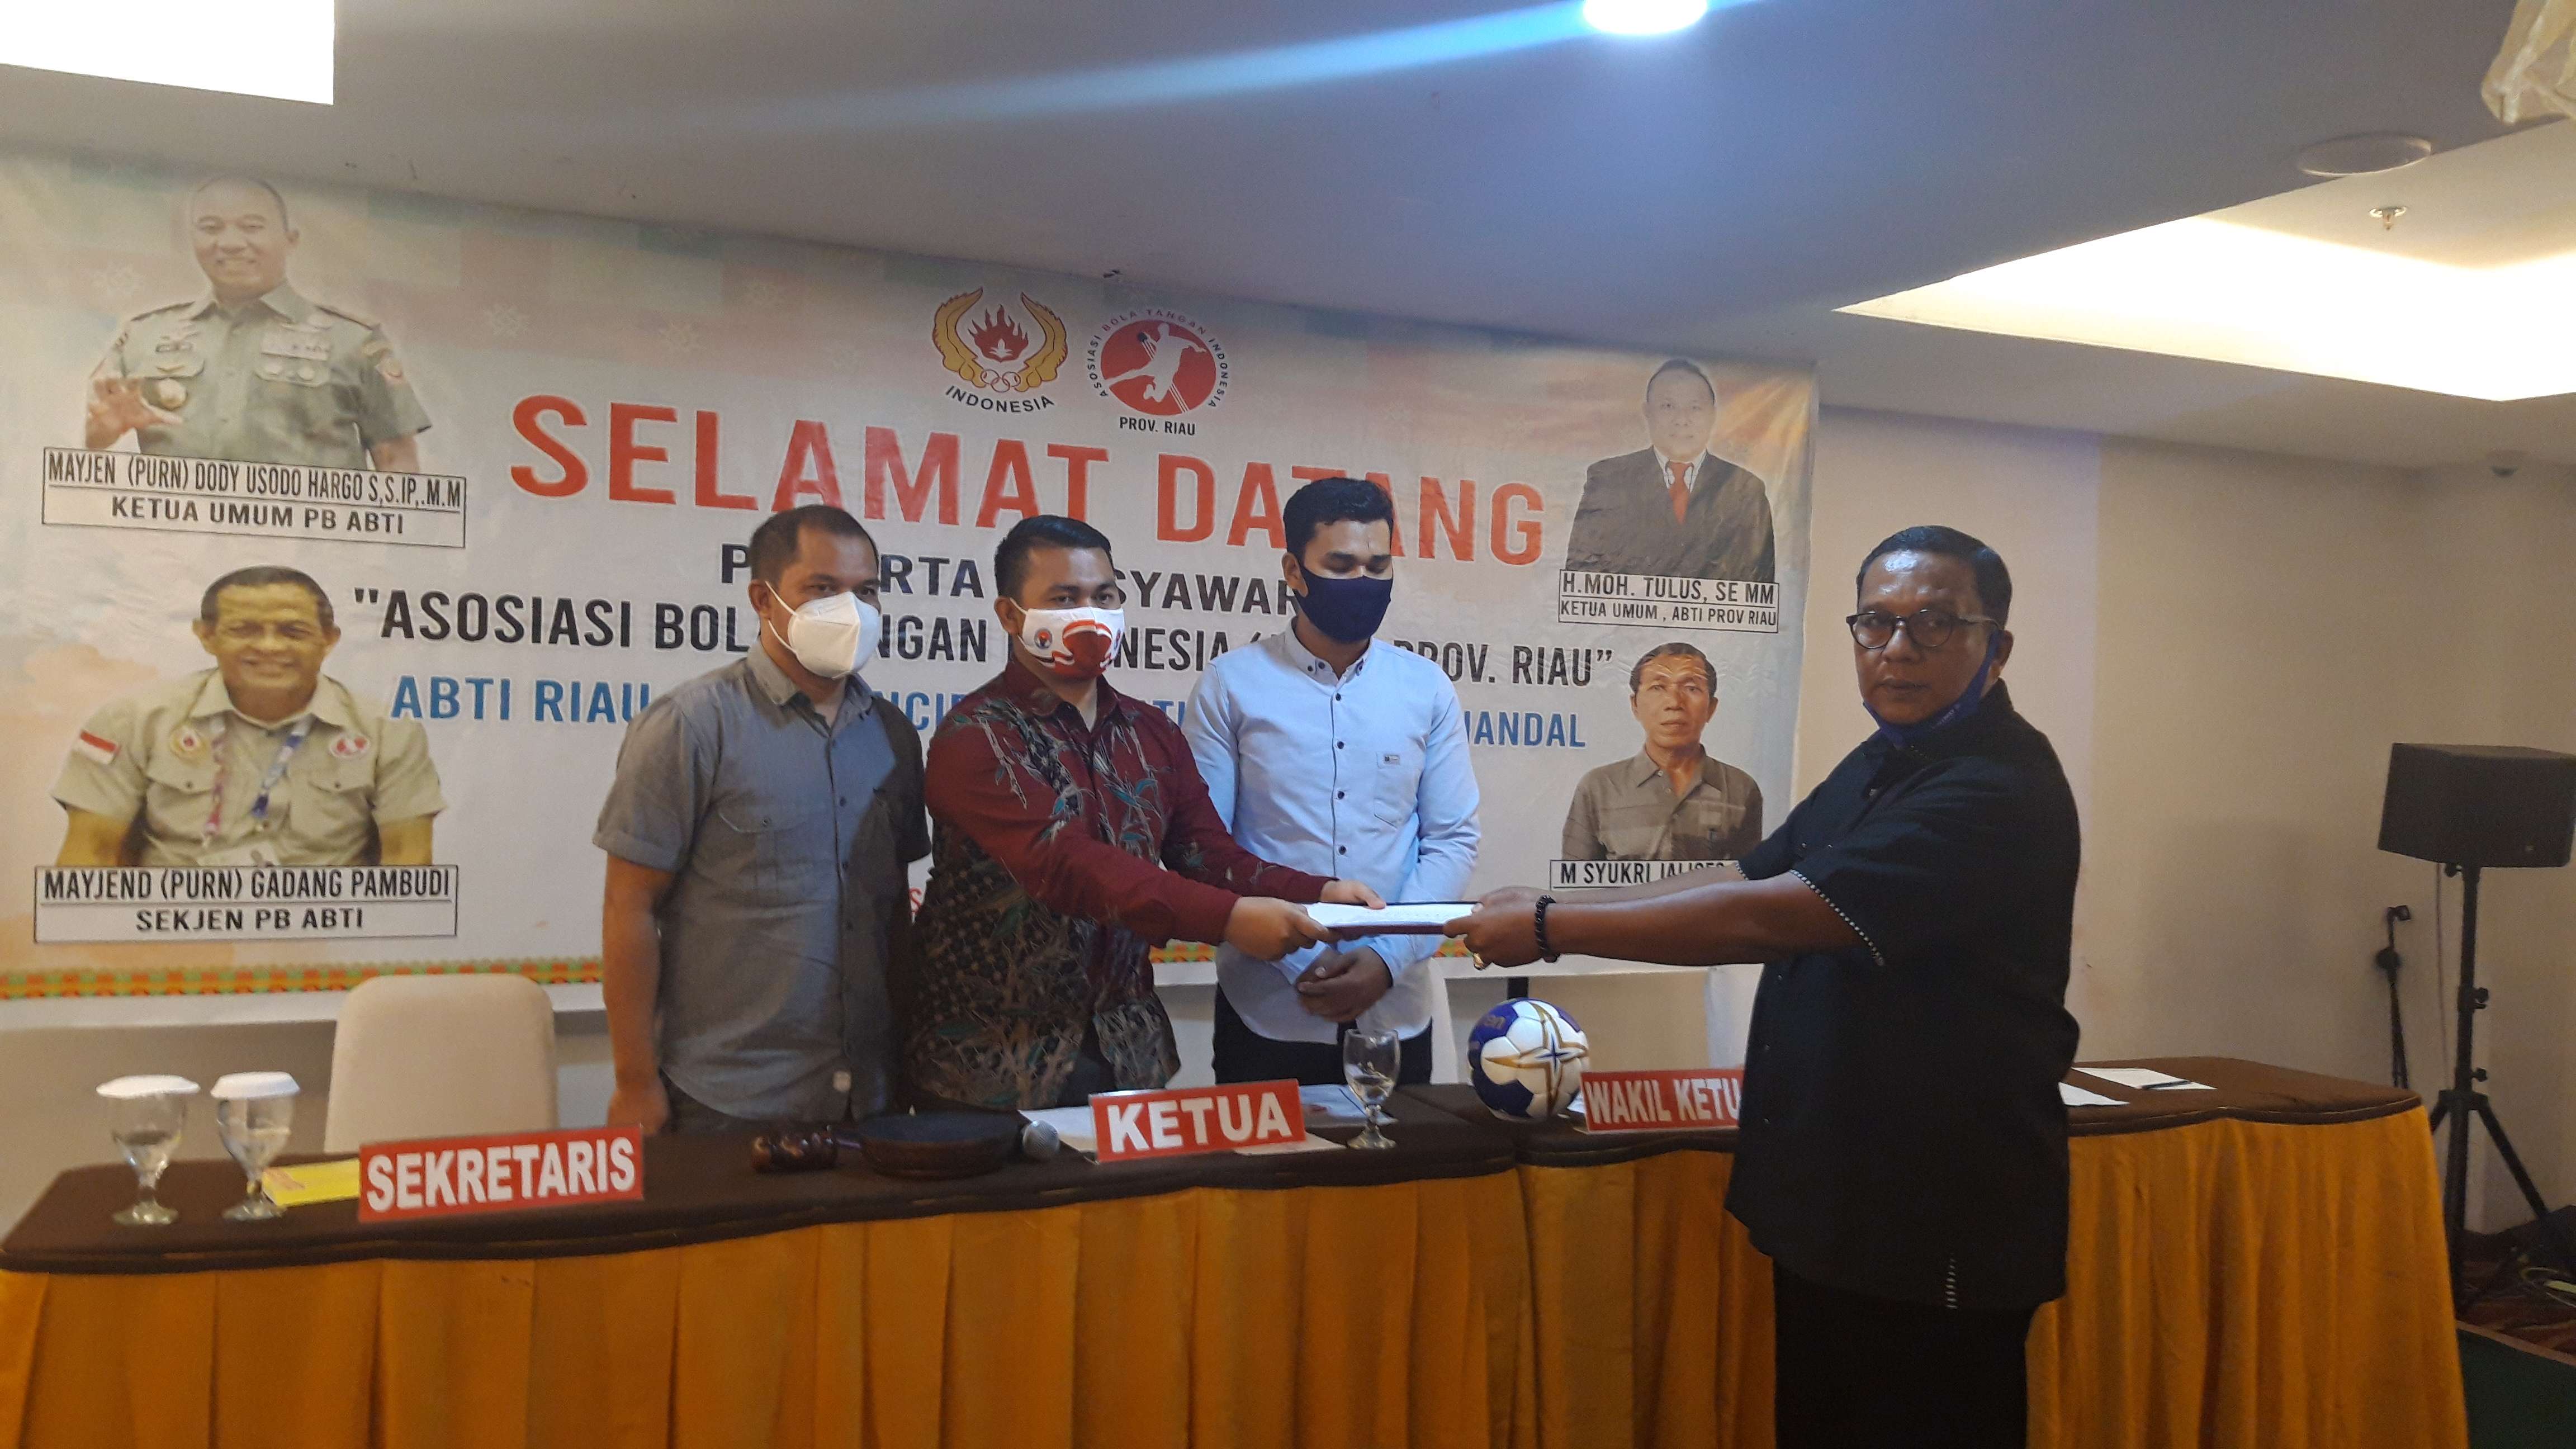 David Dailami Pimpin ABTI Riau